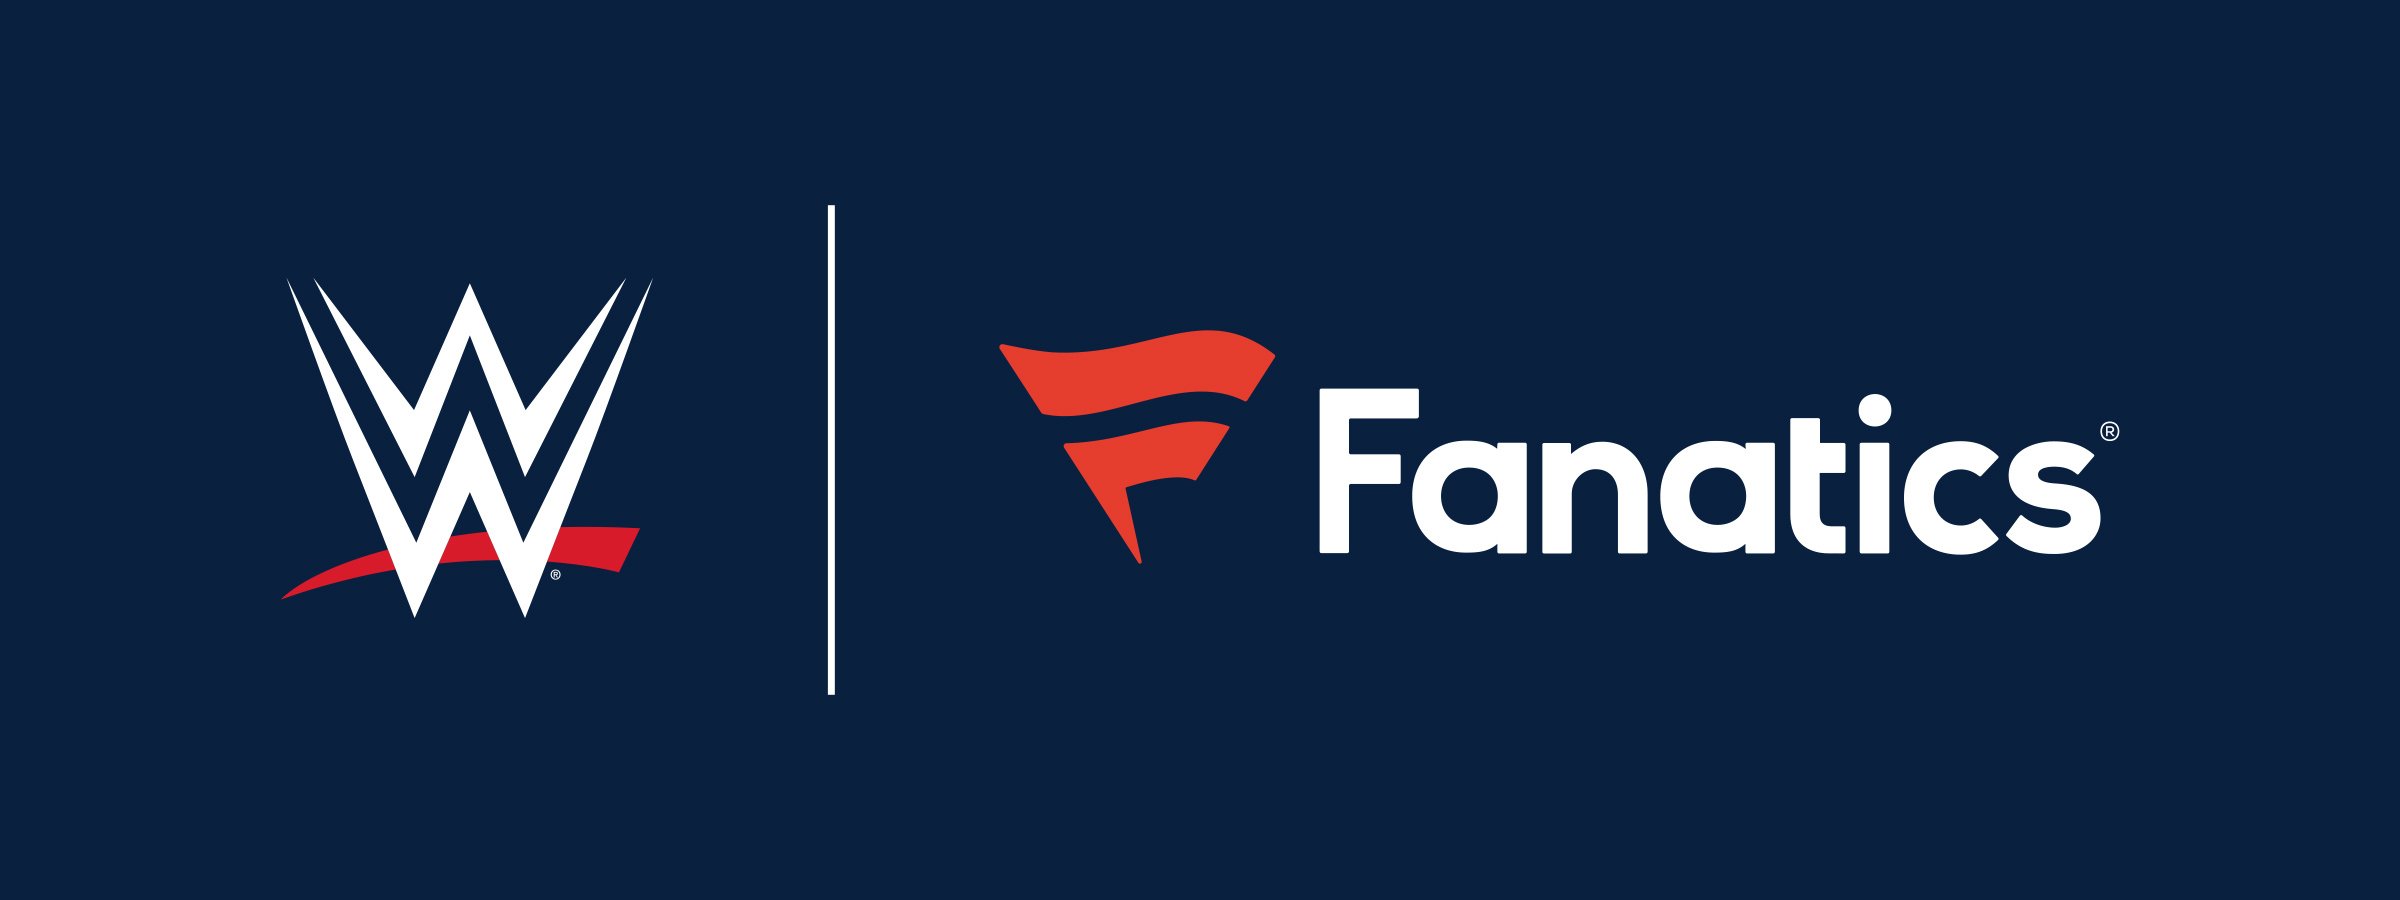 Dallas Cowboys and Fanatics Agree to Exclusive 10-Year Merchandise  Partnership — Fanatics Inc